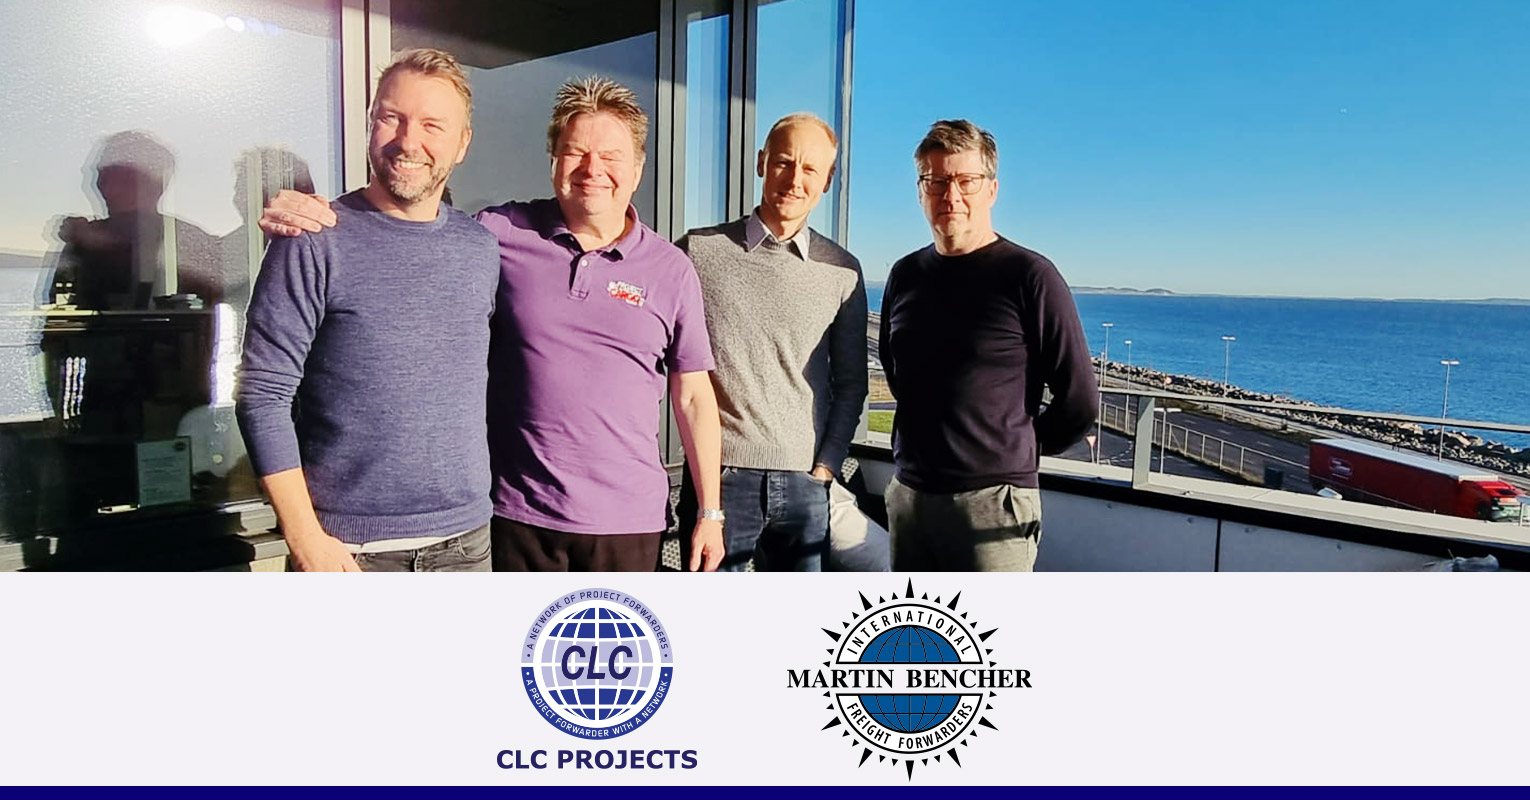 CLC Projects meeting with member, Martin Bencher in Aarhus, Denmark